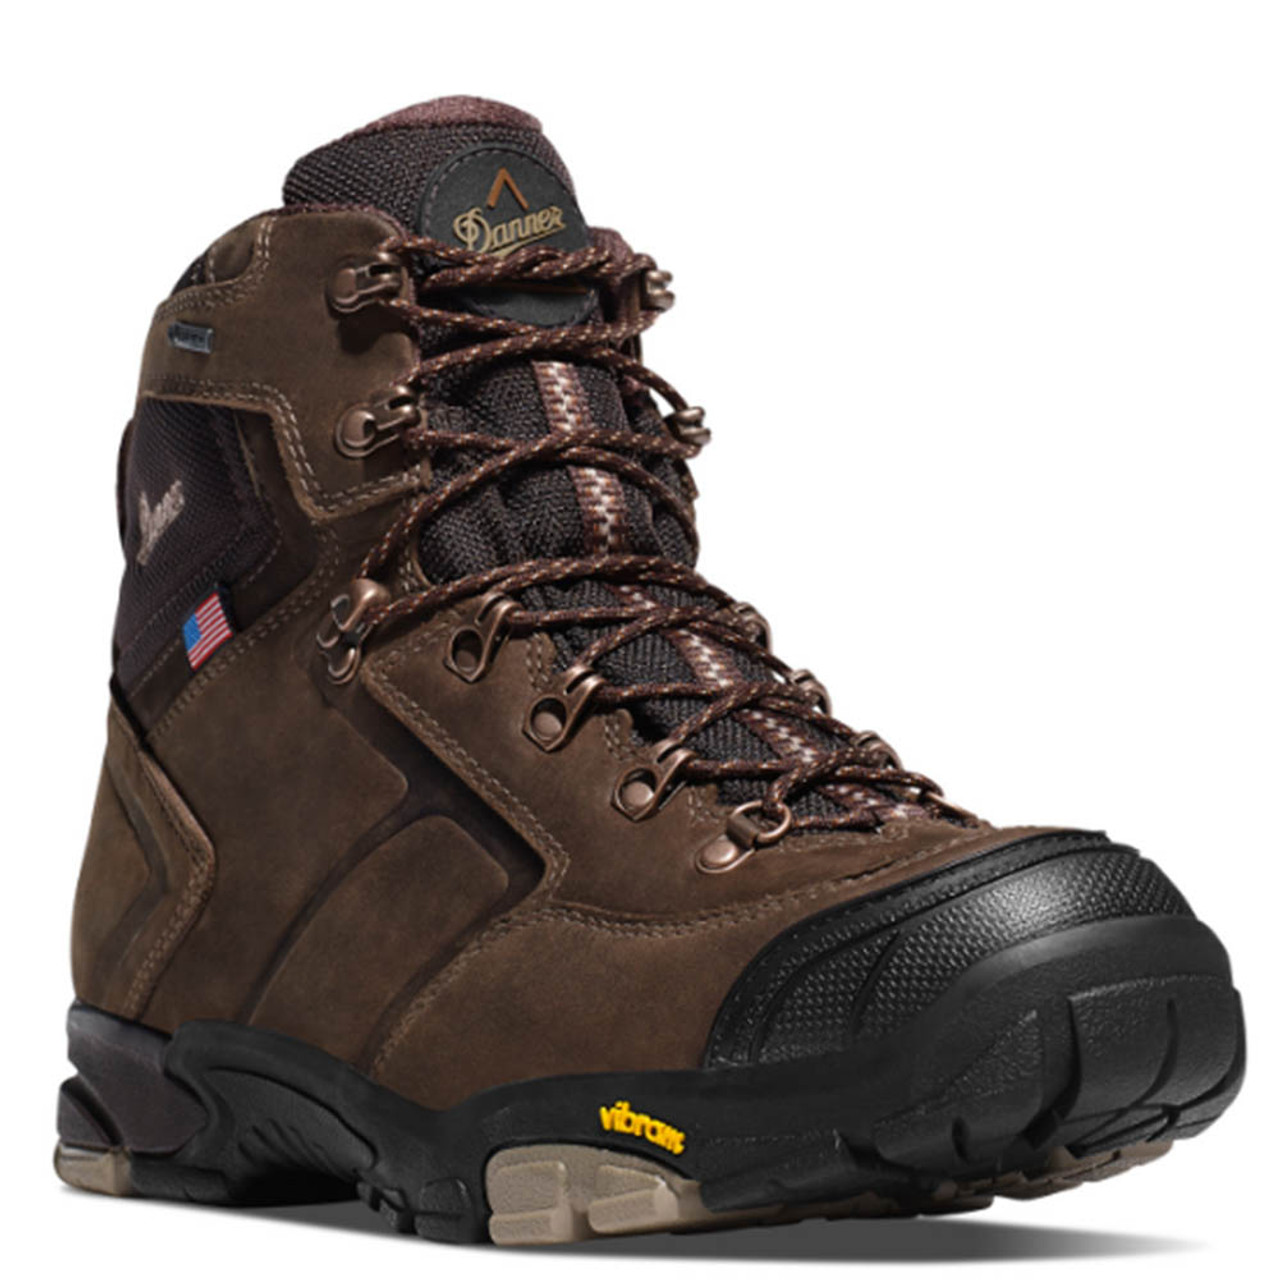 Danner Hiking Boots #65810 USA MADE Mt. Adams - Family Footwear Center